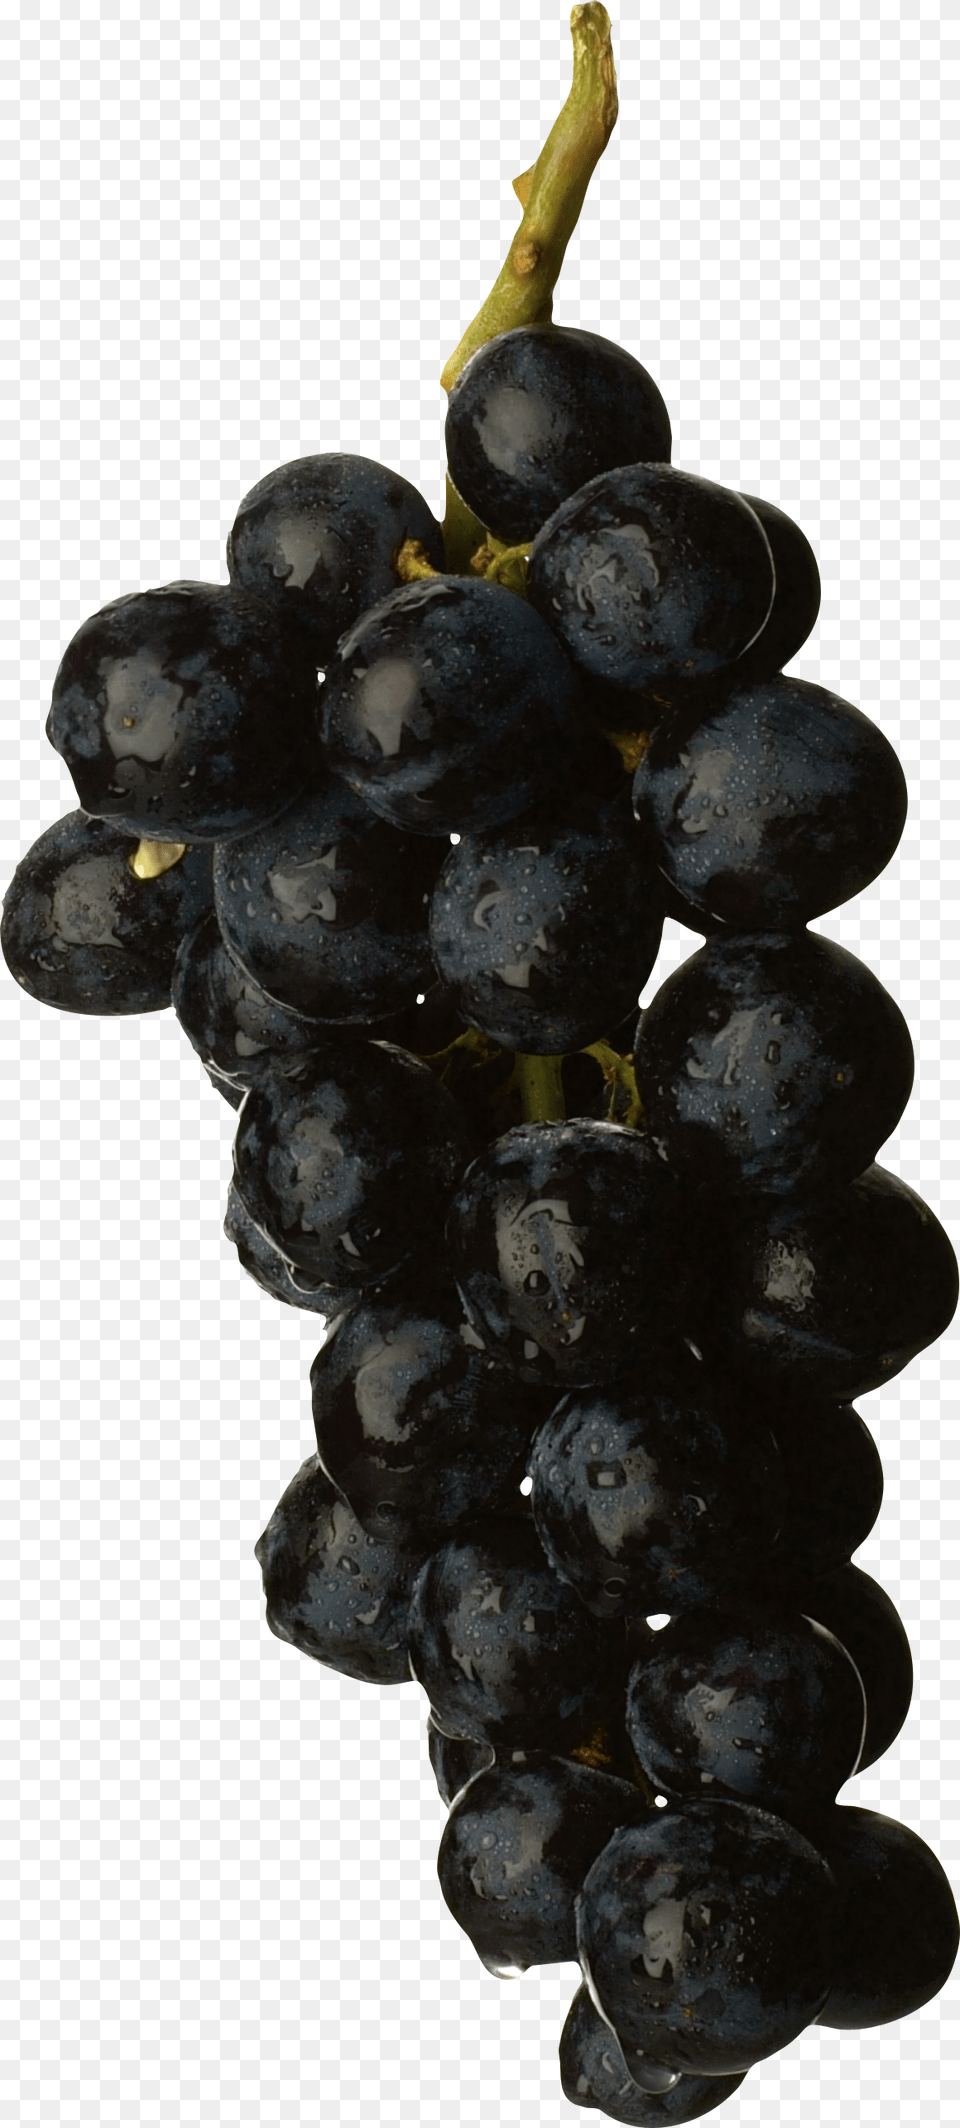 Black Grapes Image Black Grapes Fruit, Food, Plant, Produce Free Png Download